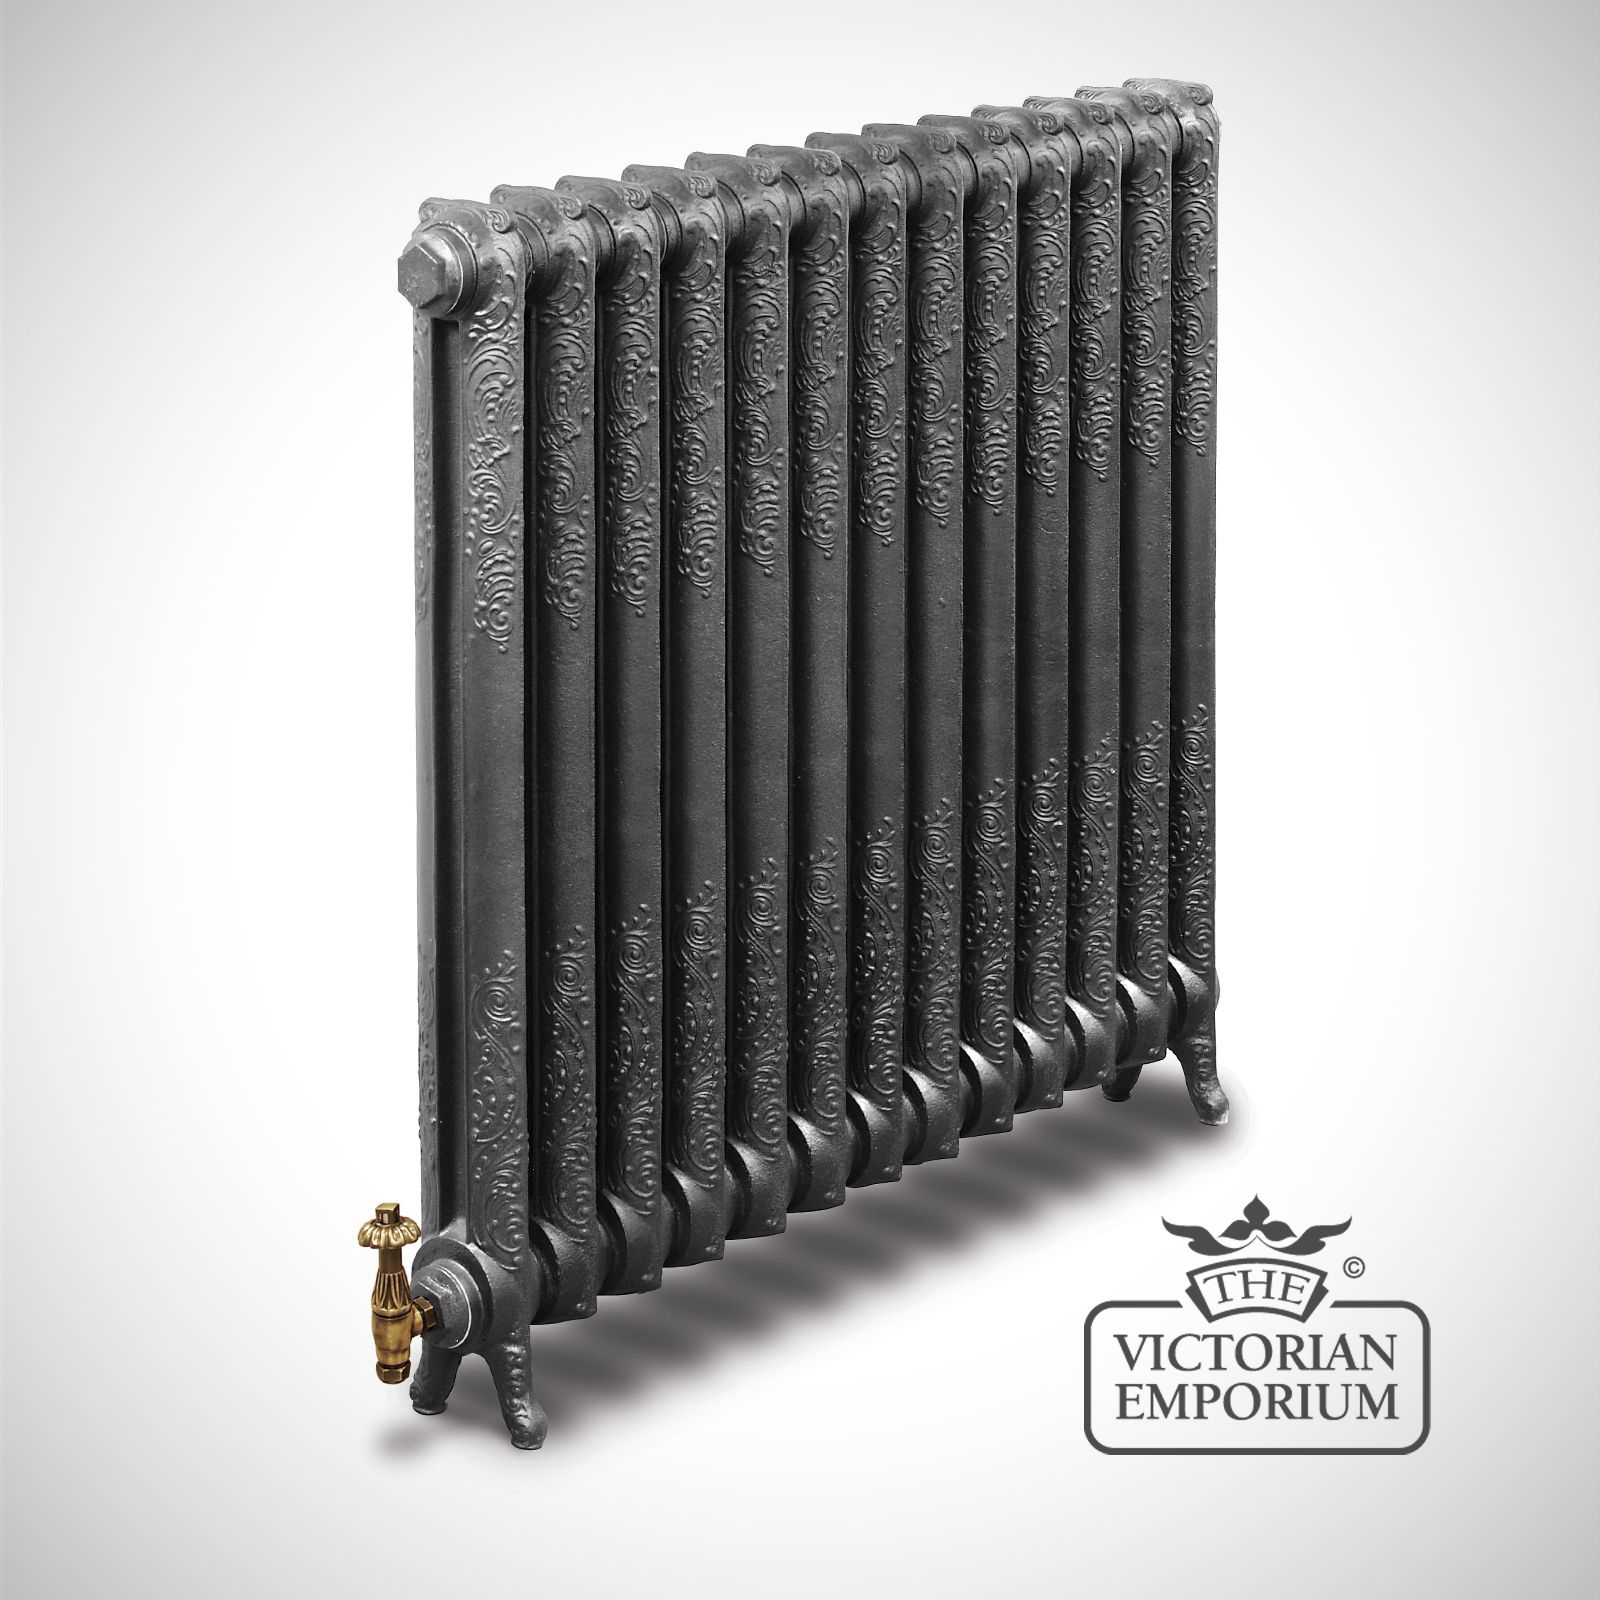 Rocco radiator 1 column 6560mm high